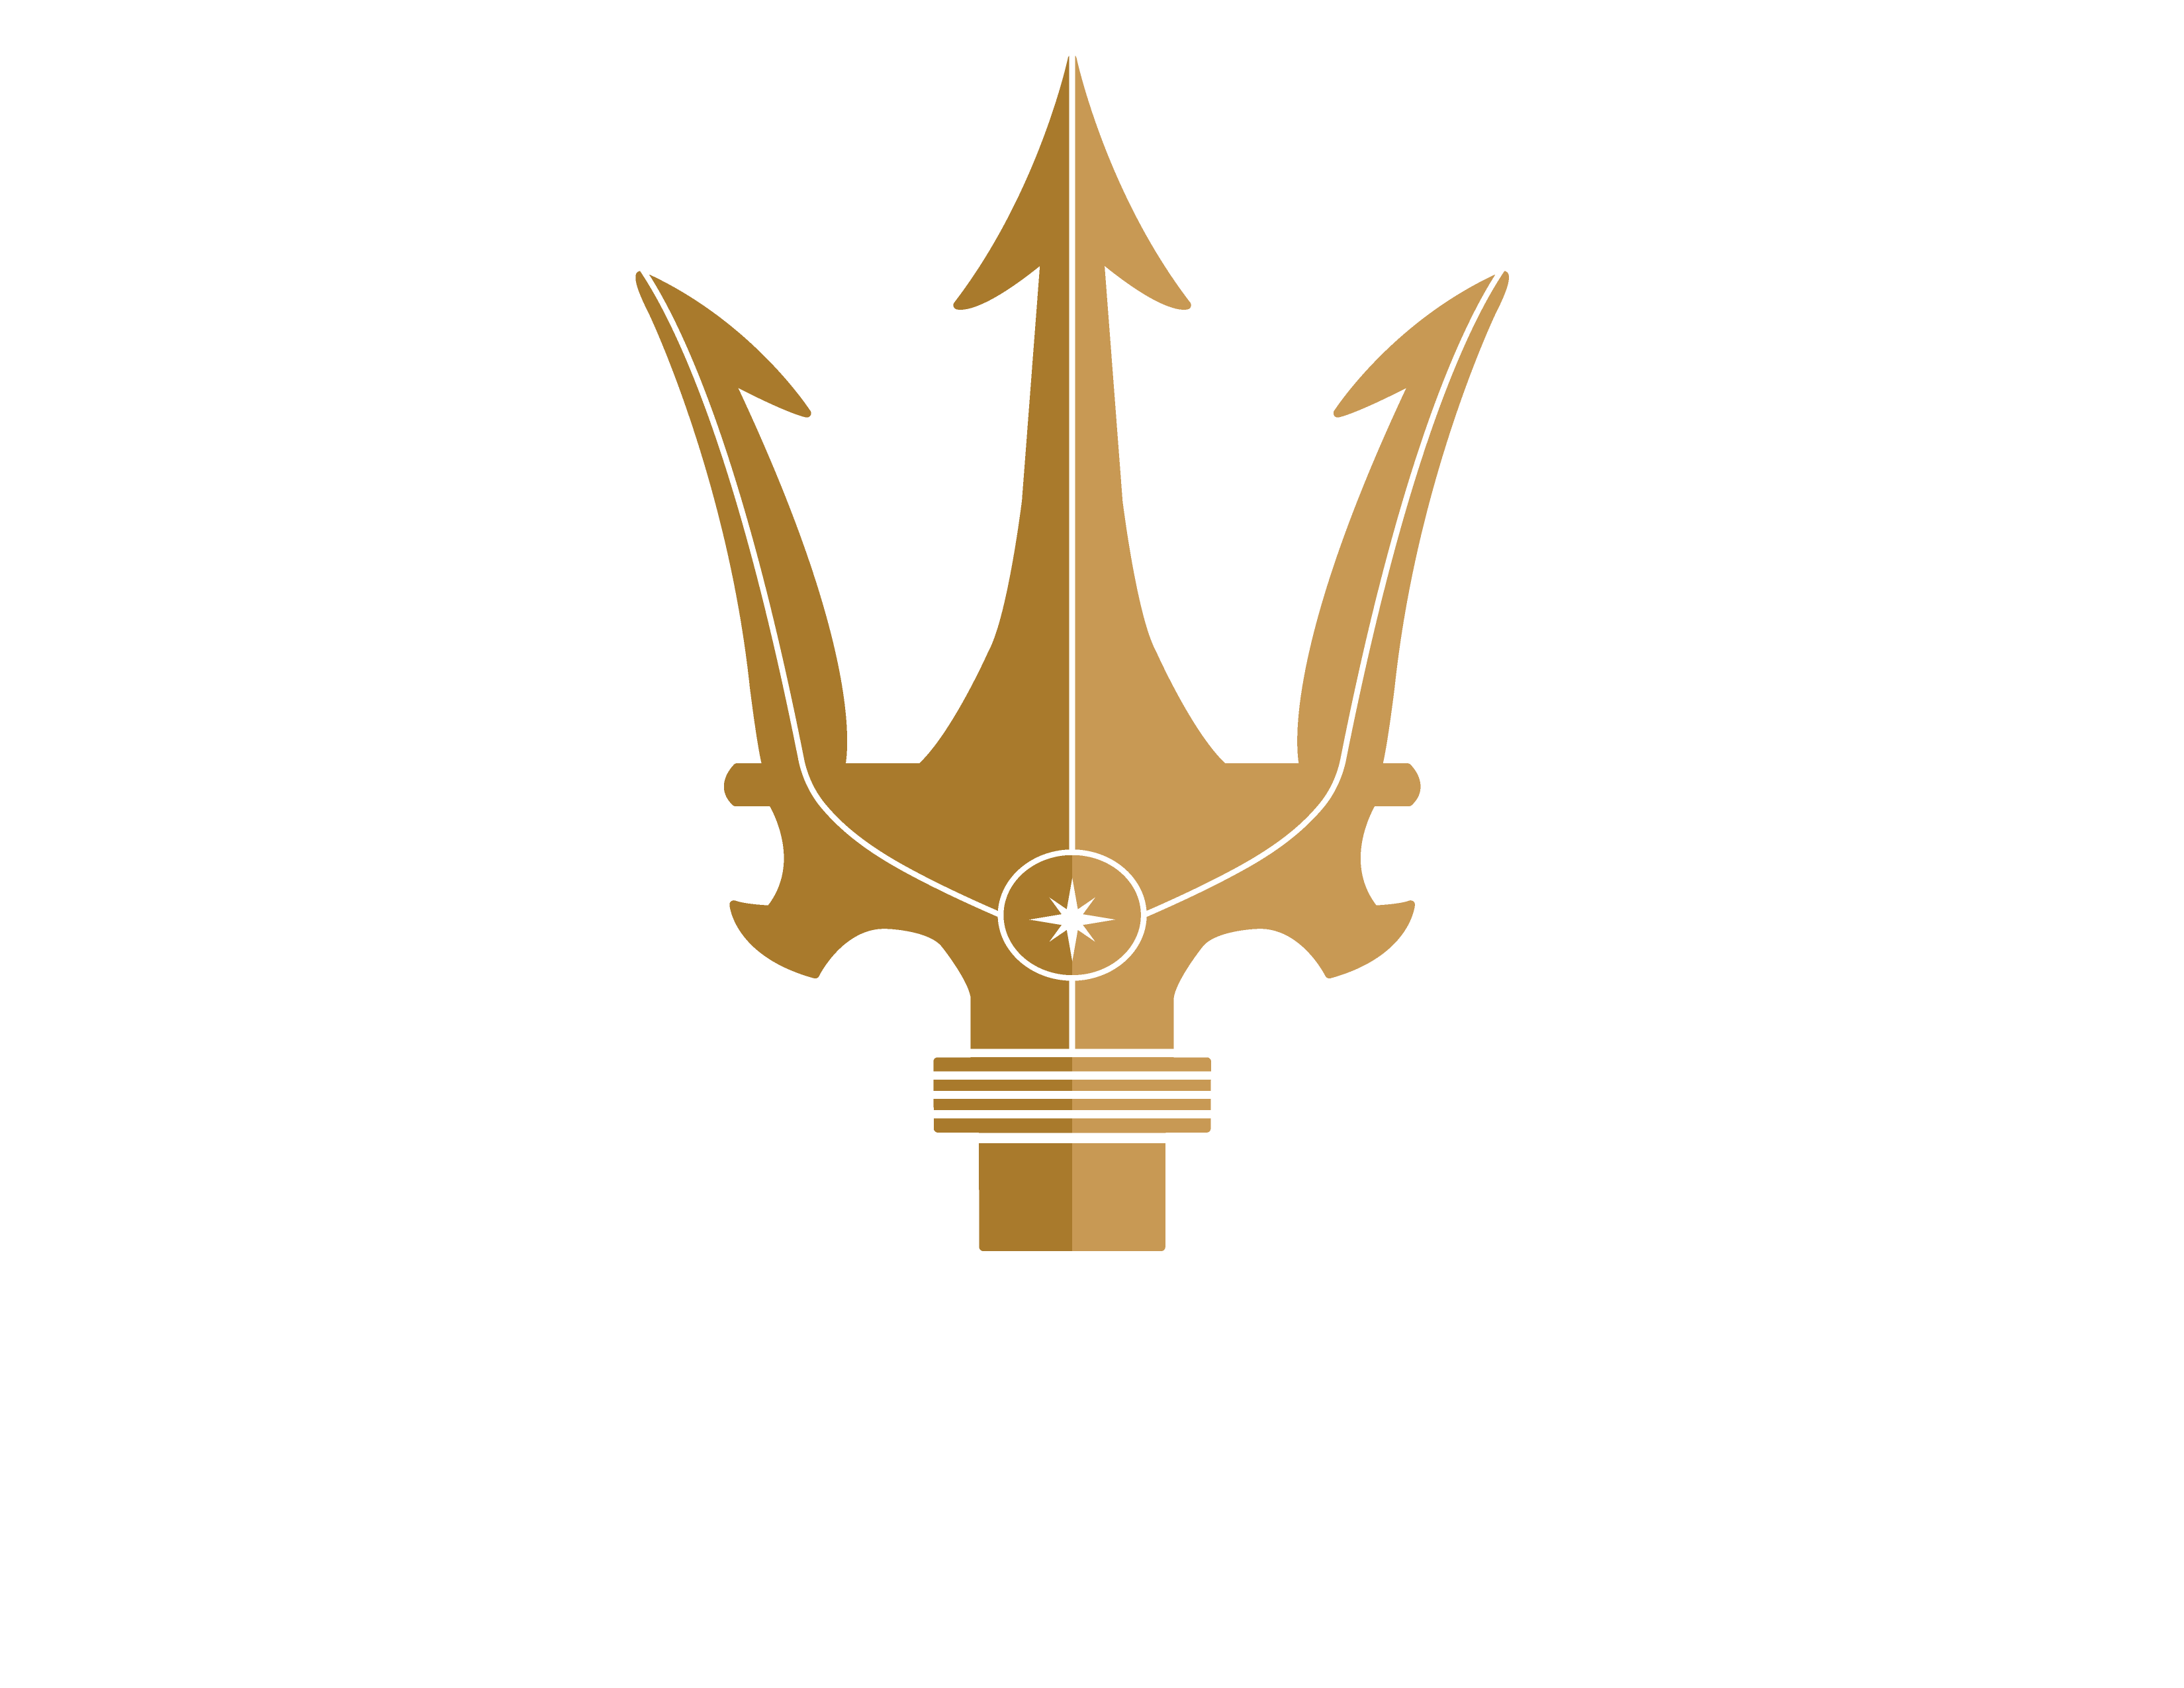 munich logo